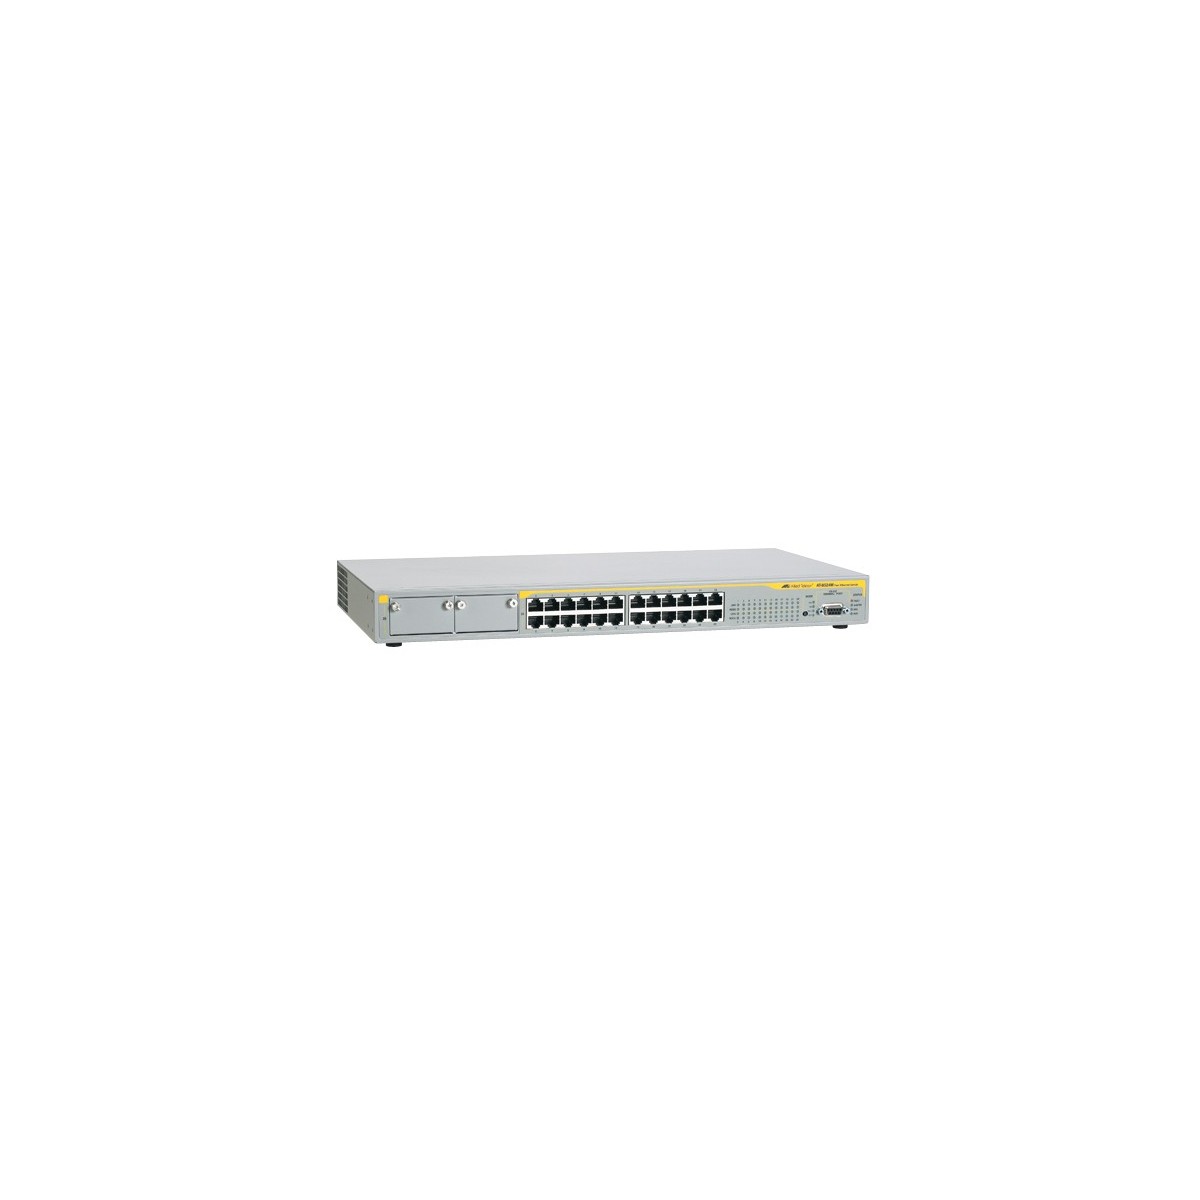 Allied Telesis 10/100TX x 24 ports Managed Fast Ethernet Layer 2+ Switch - Managed - L2+ - Full duplex - 1U